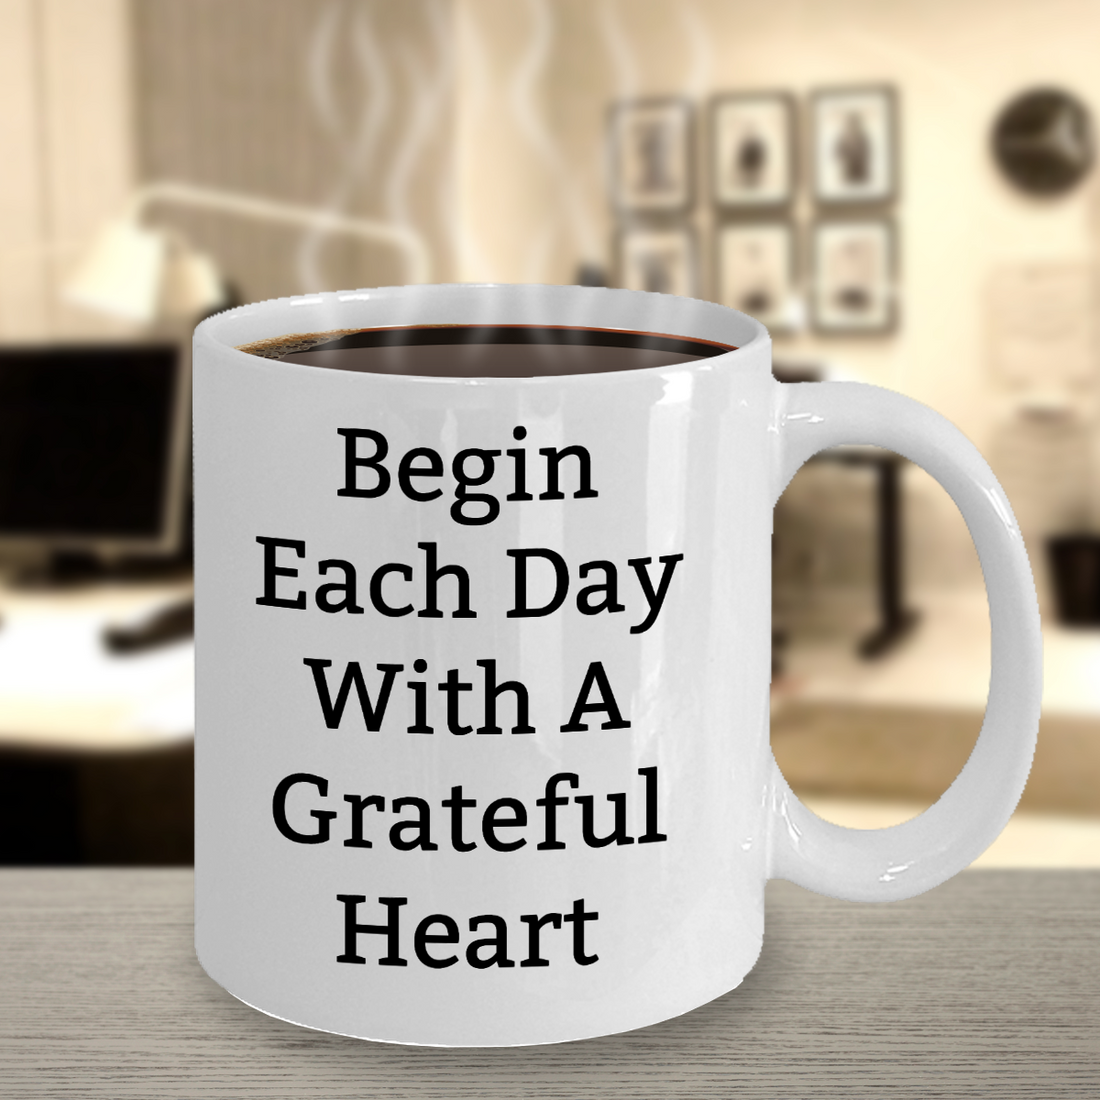 Begin each day with a grateful heart inspirational coffee mug